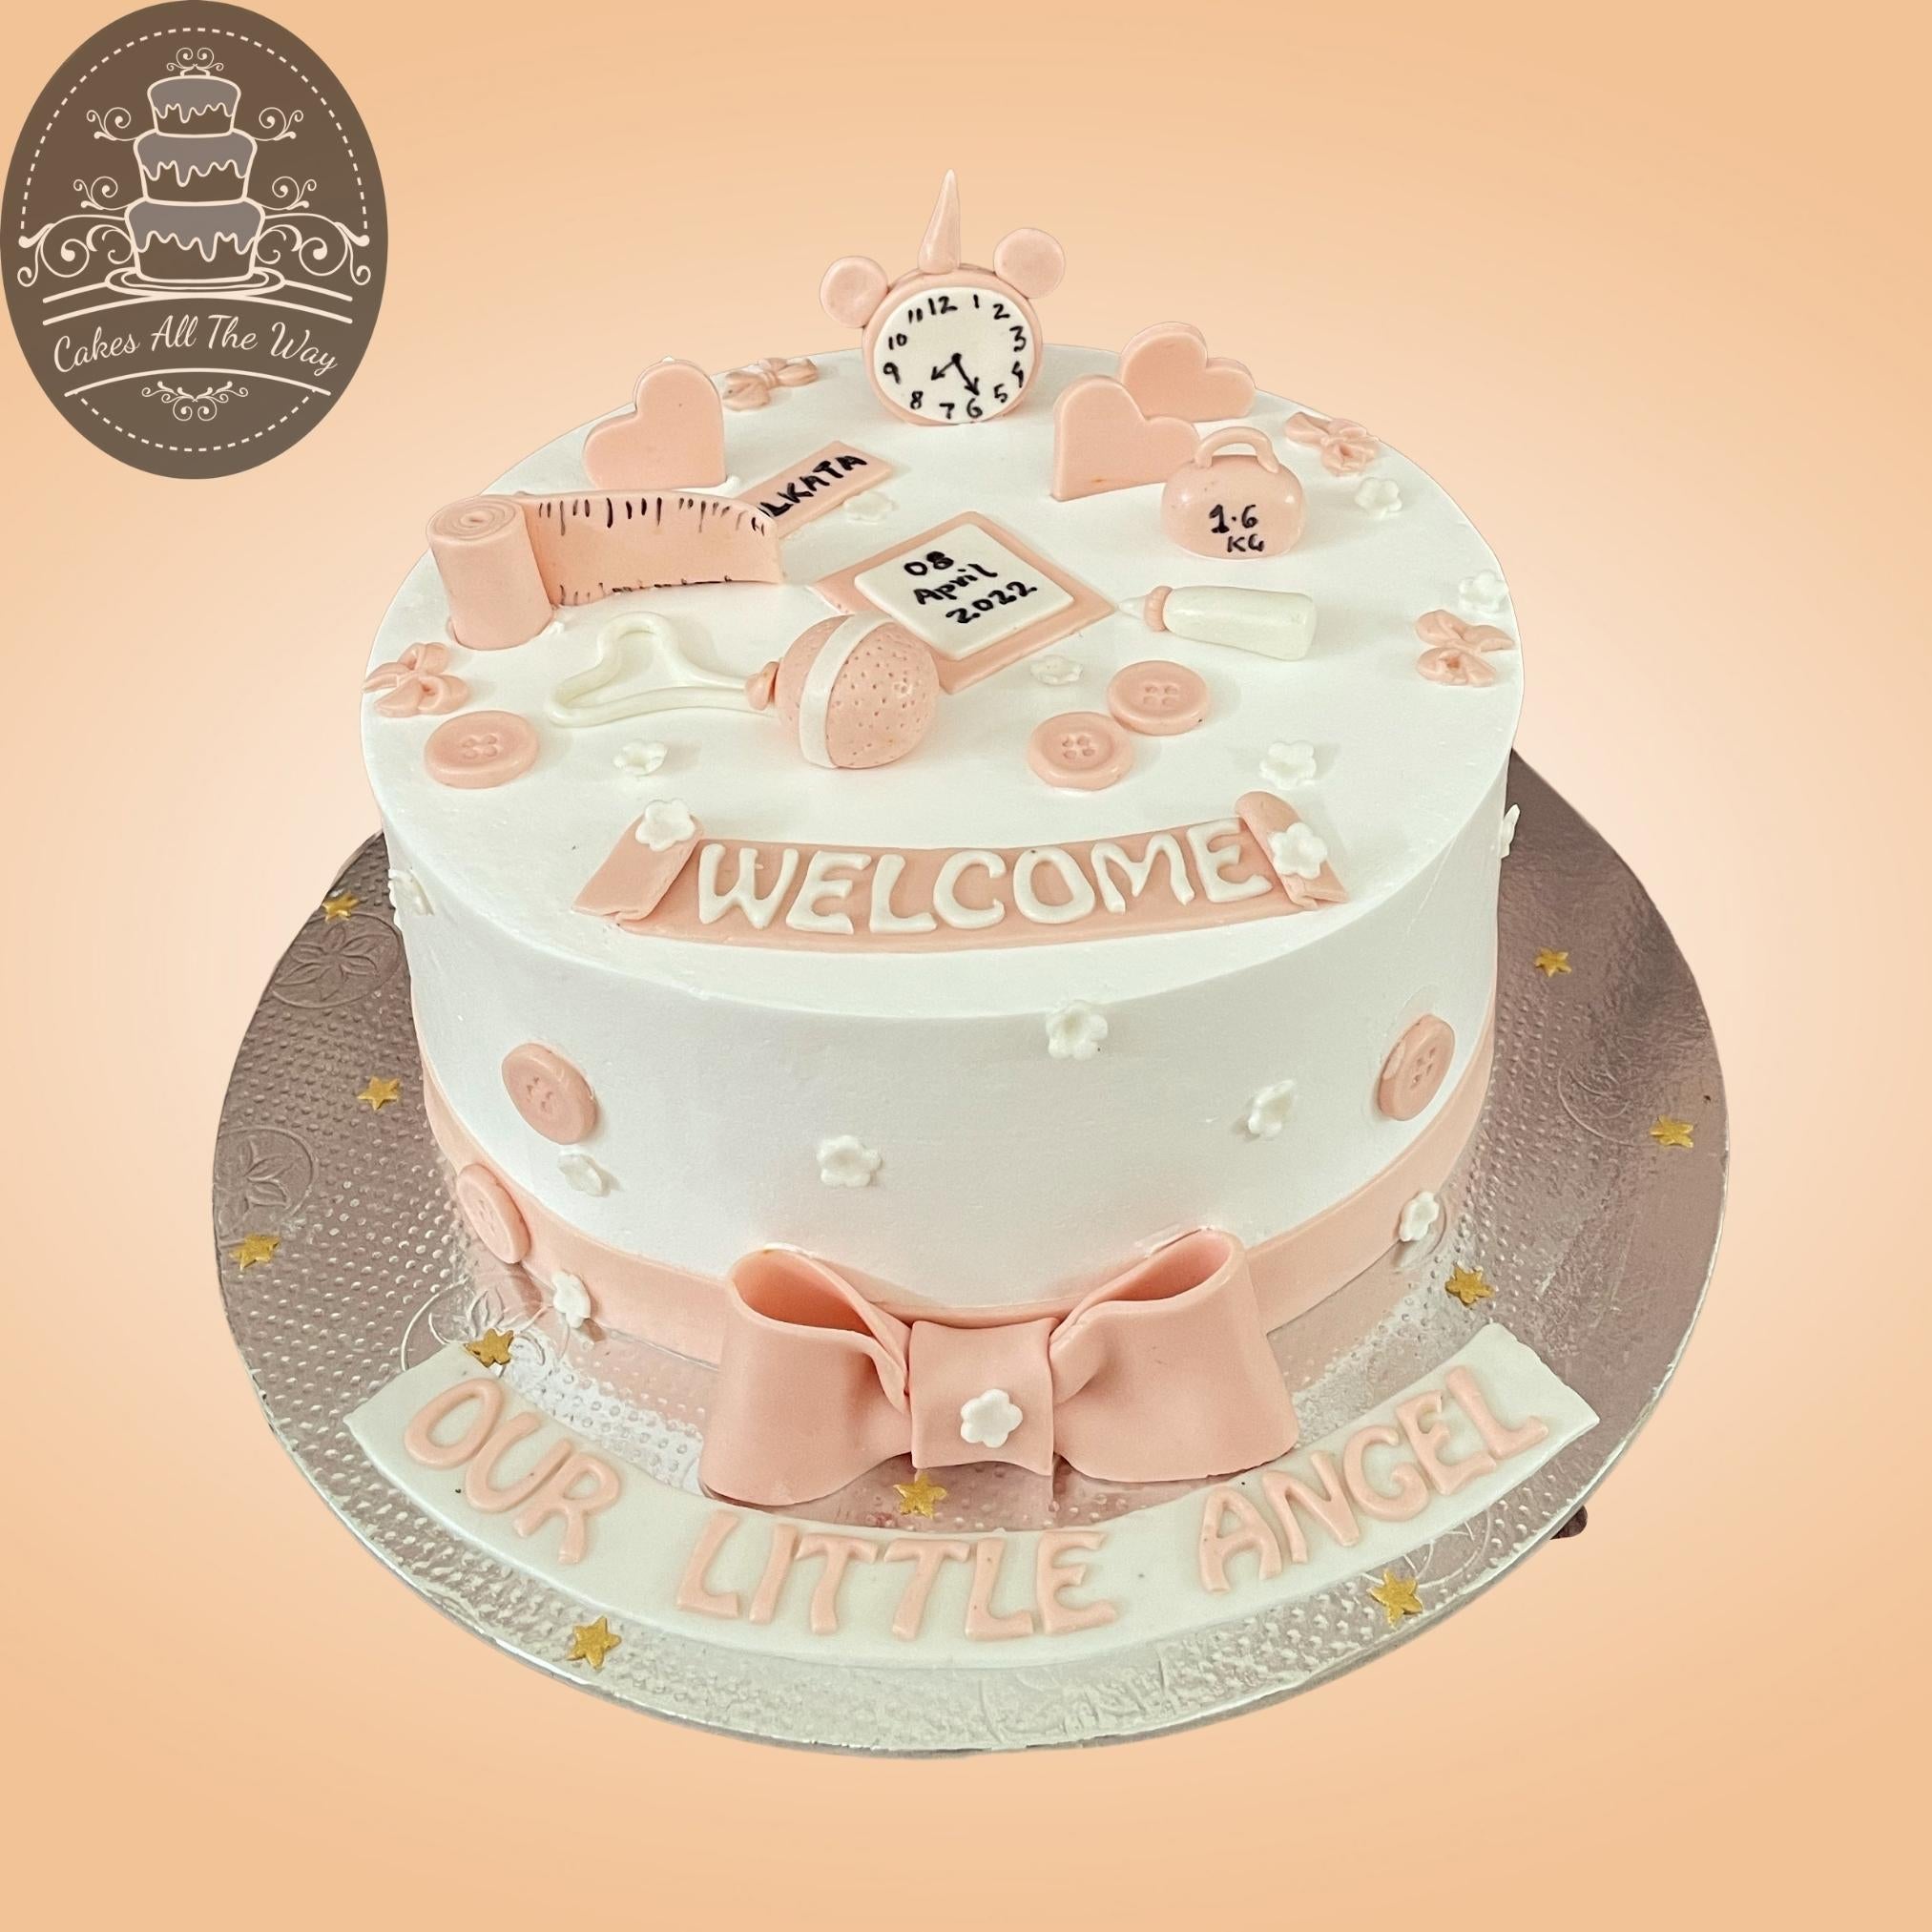 Welcome Cake 002 – Jui's Cake